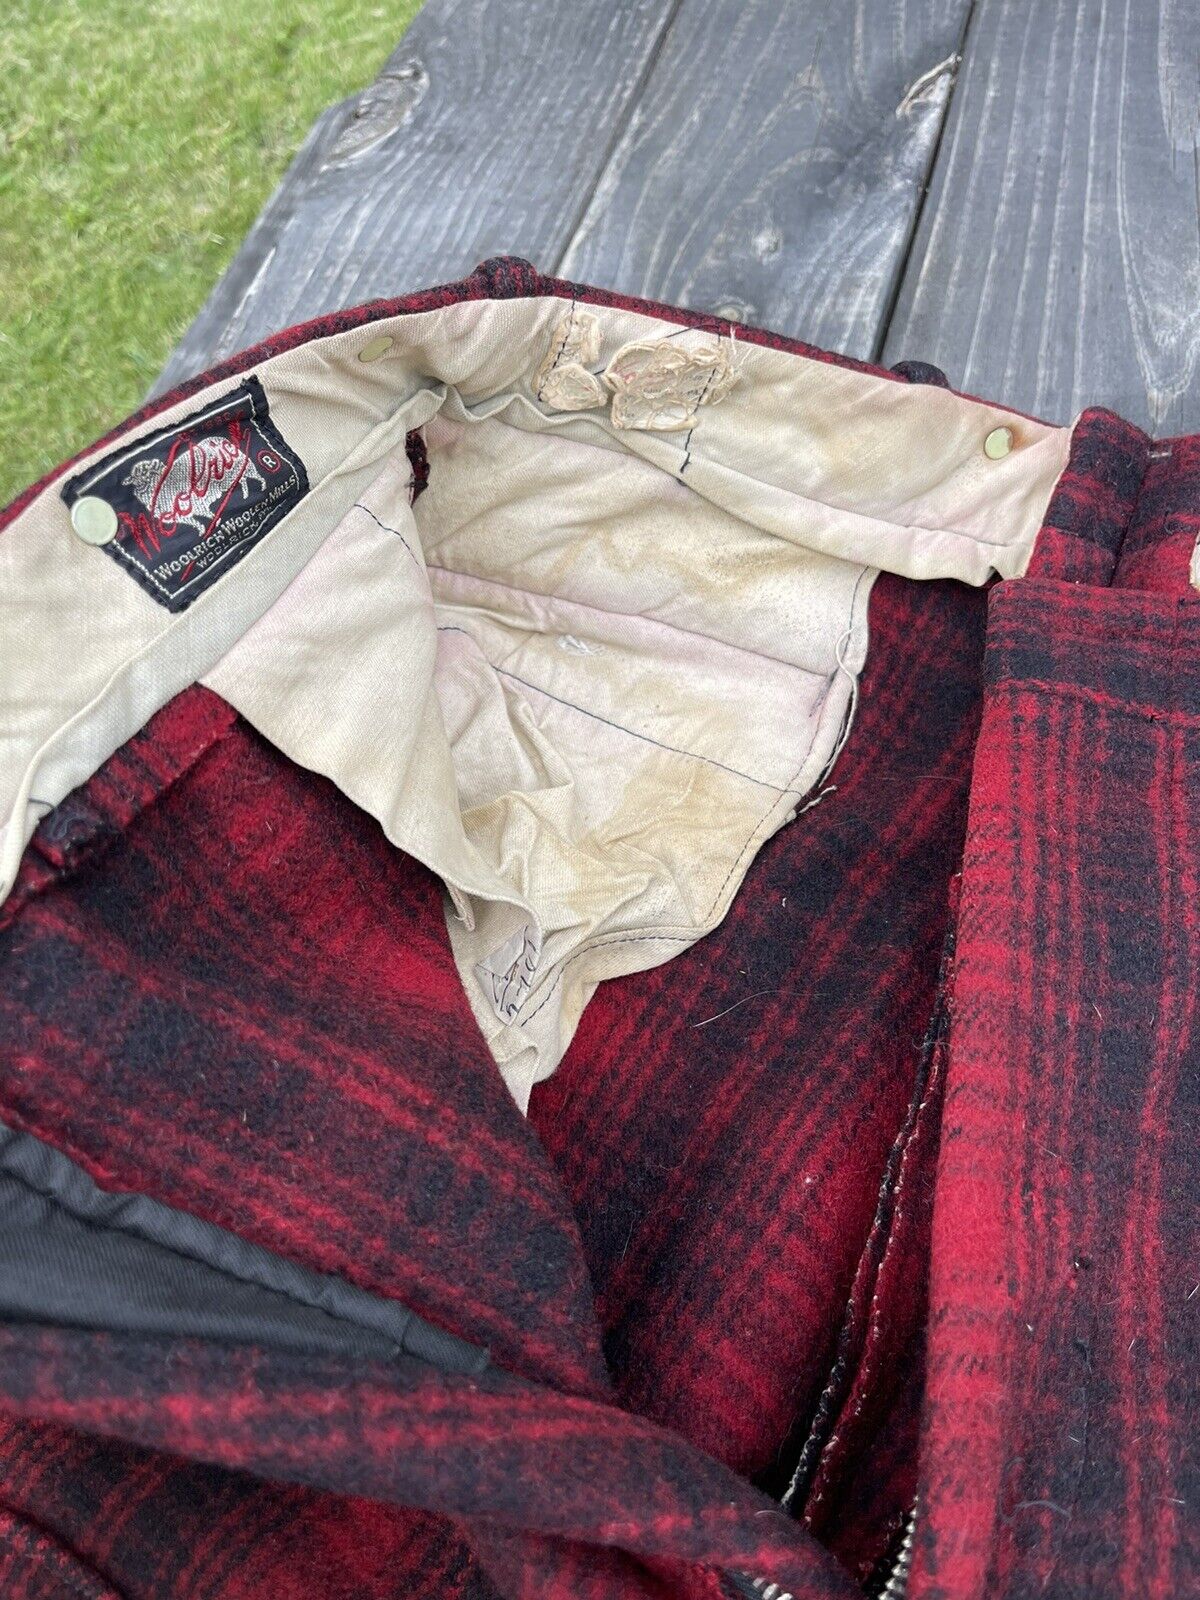 VTG 1930s/1940s WOOLRICH Red/Black Plaid Hunting Suspender Pants ~ Sz 34 RARE